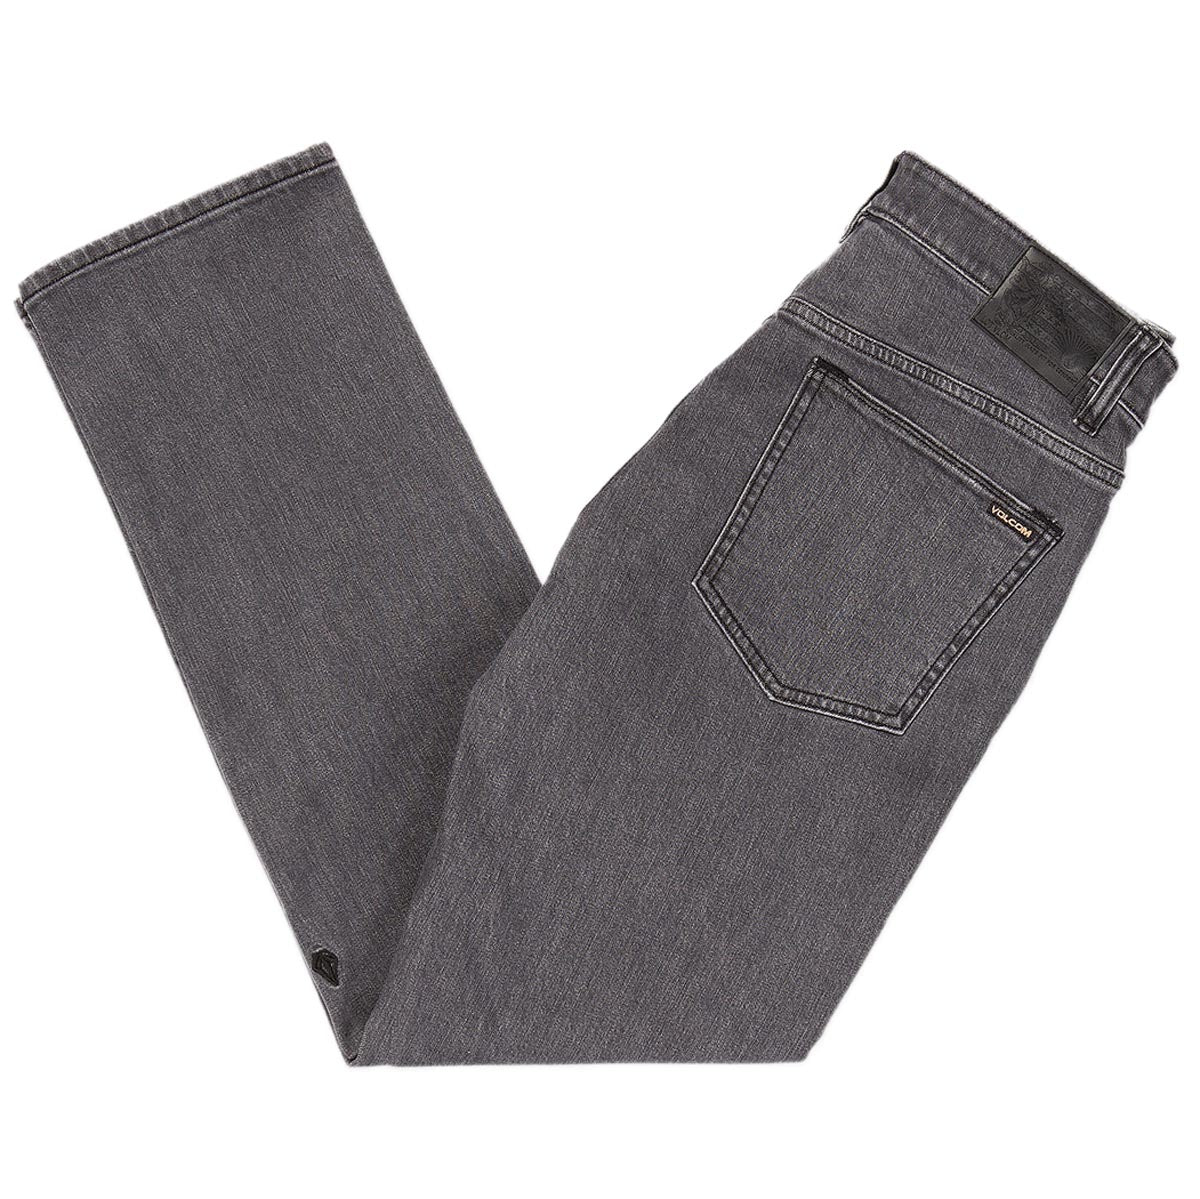 Volcom Solver Denim Jeans - Easy Enzyme Grey image 2